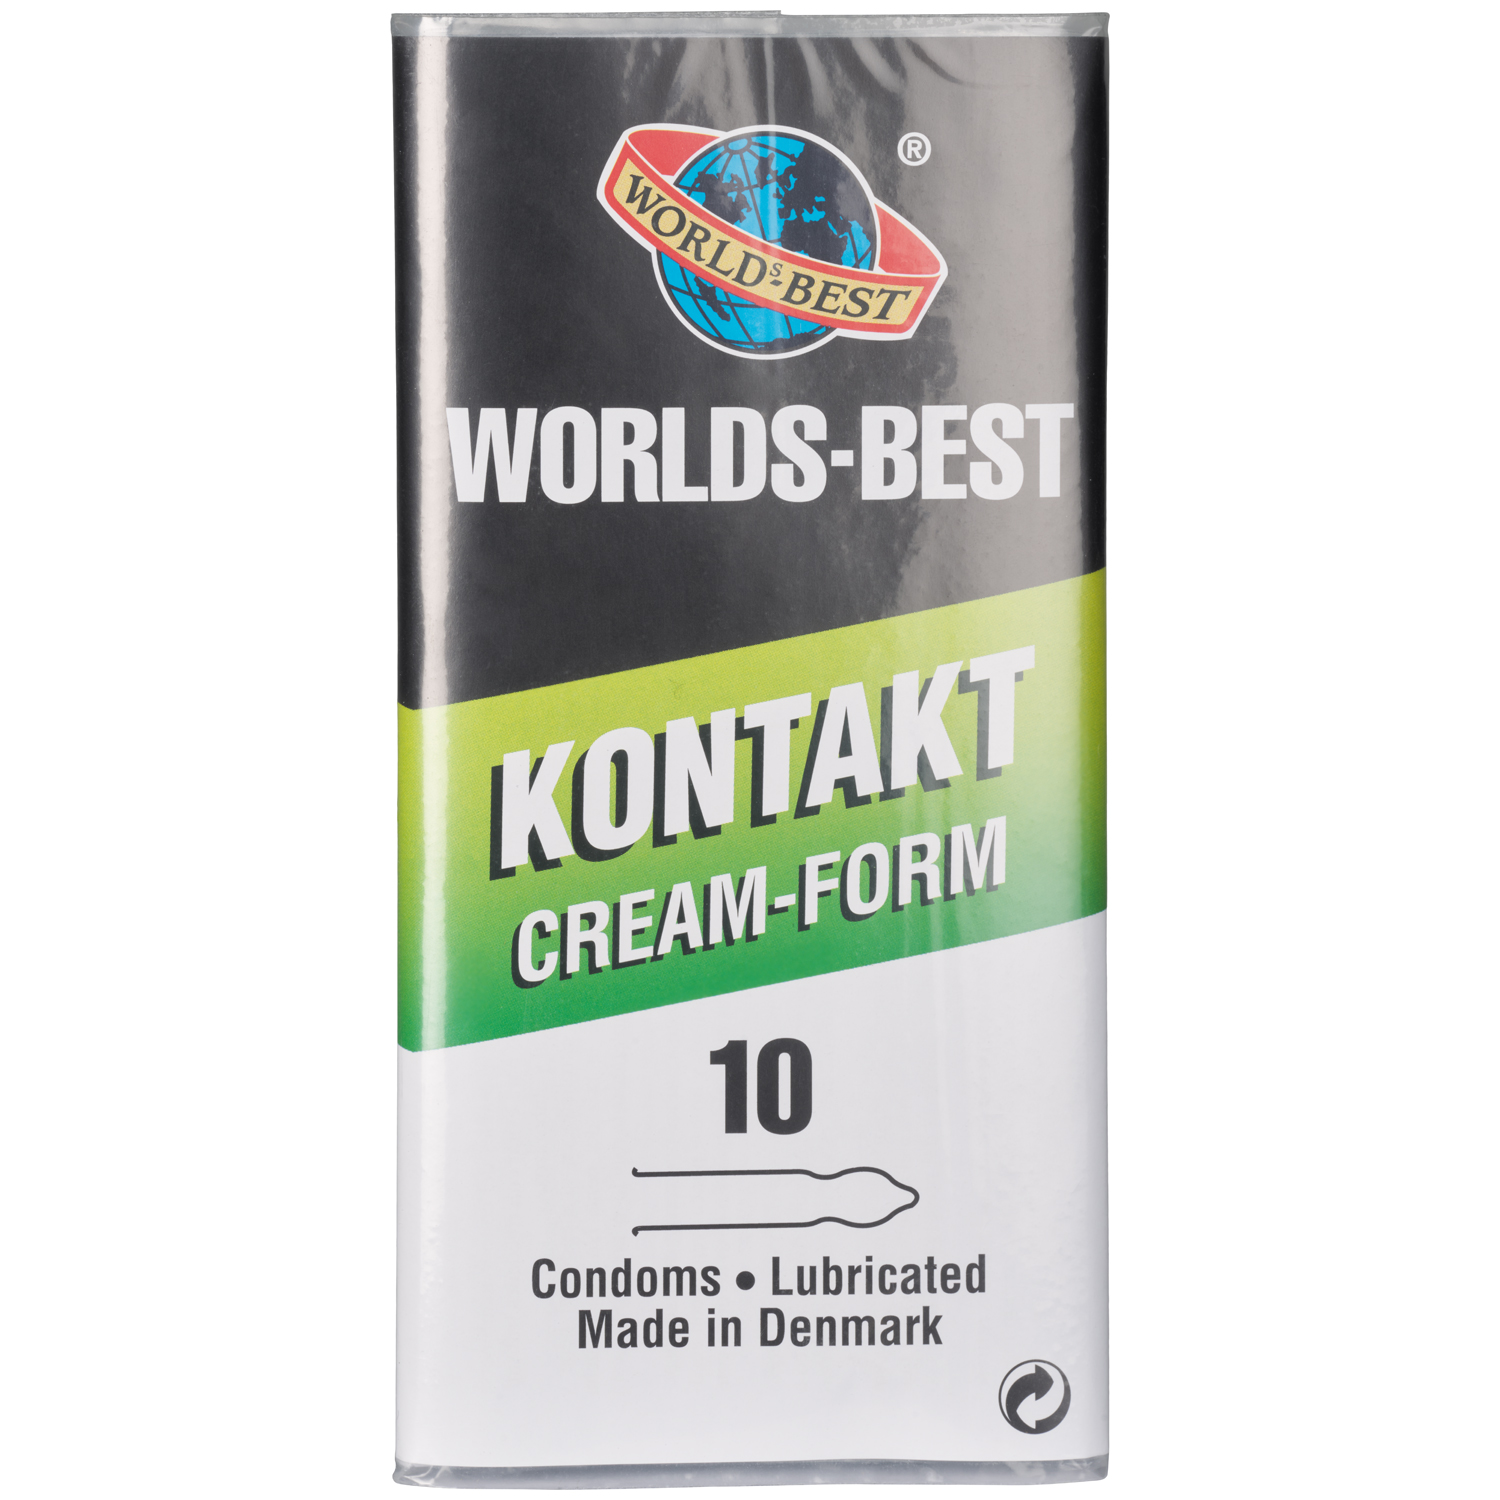 Worlds-best Kontakt Cream-Form Kondomer 10 stk.     - Klar - L